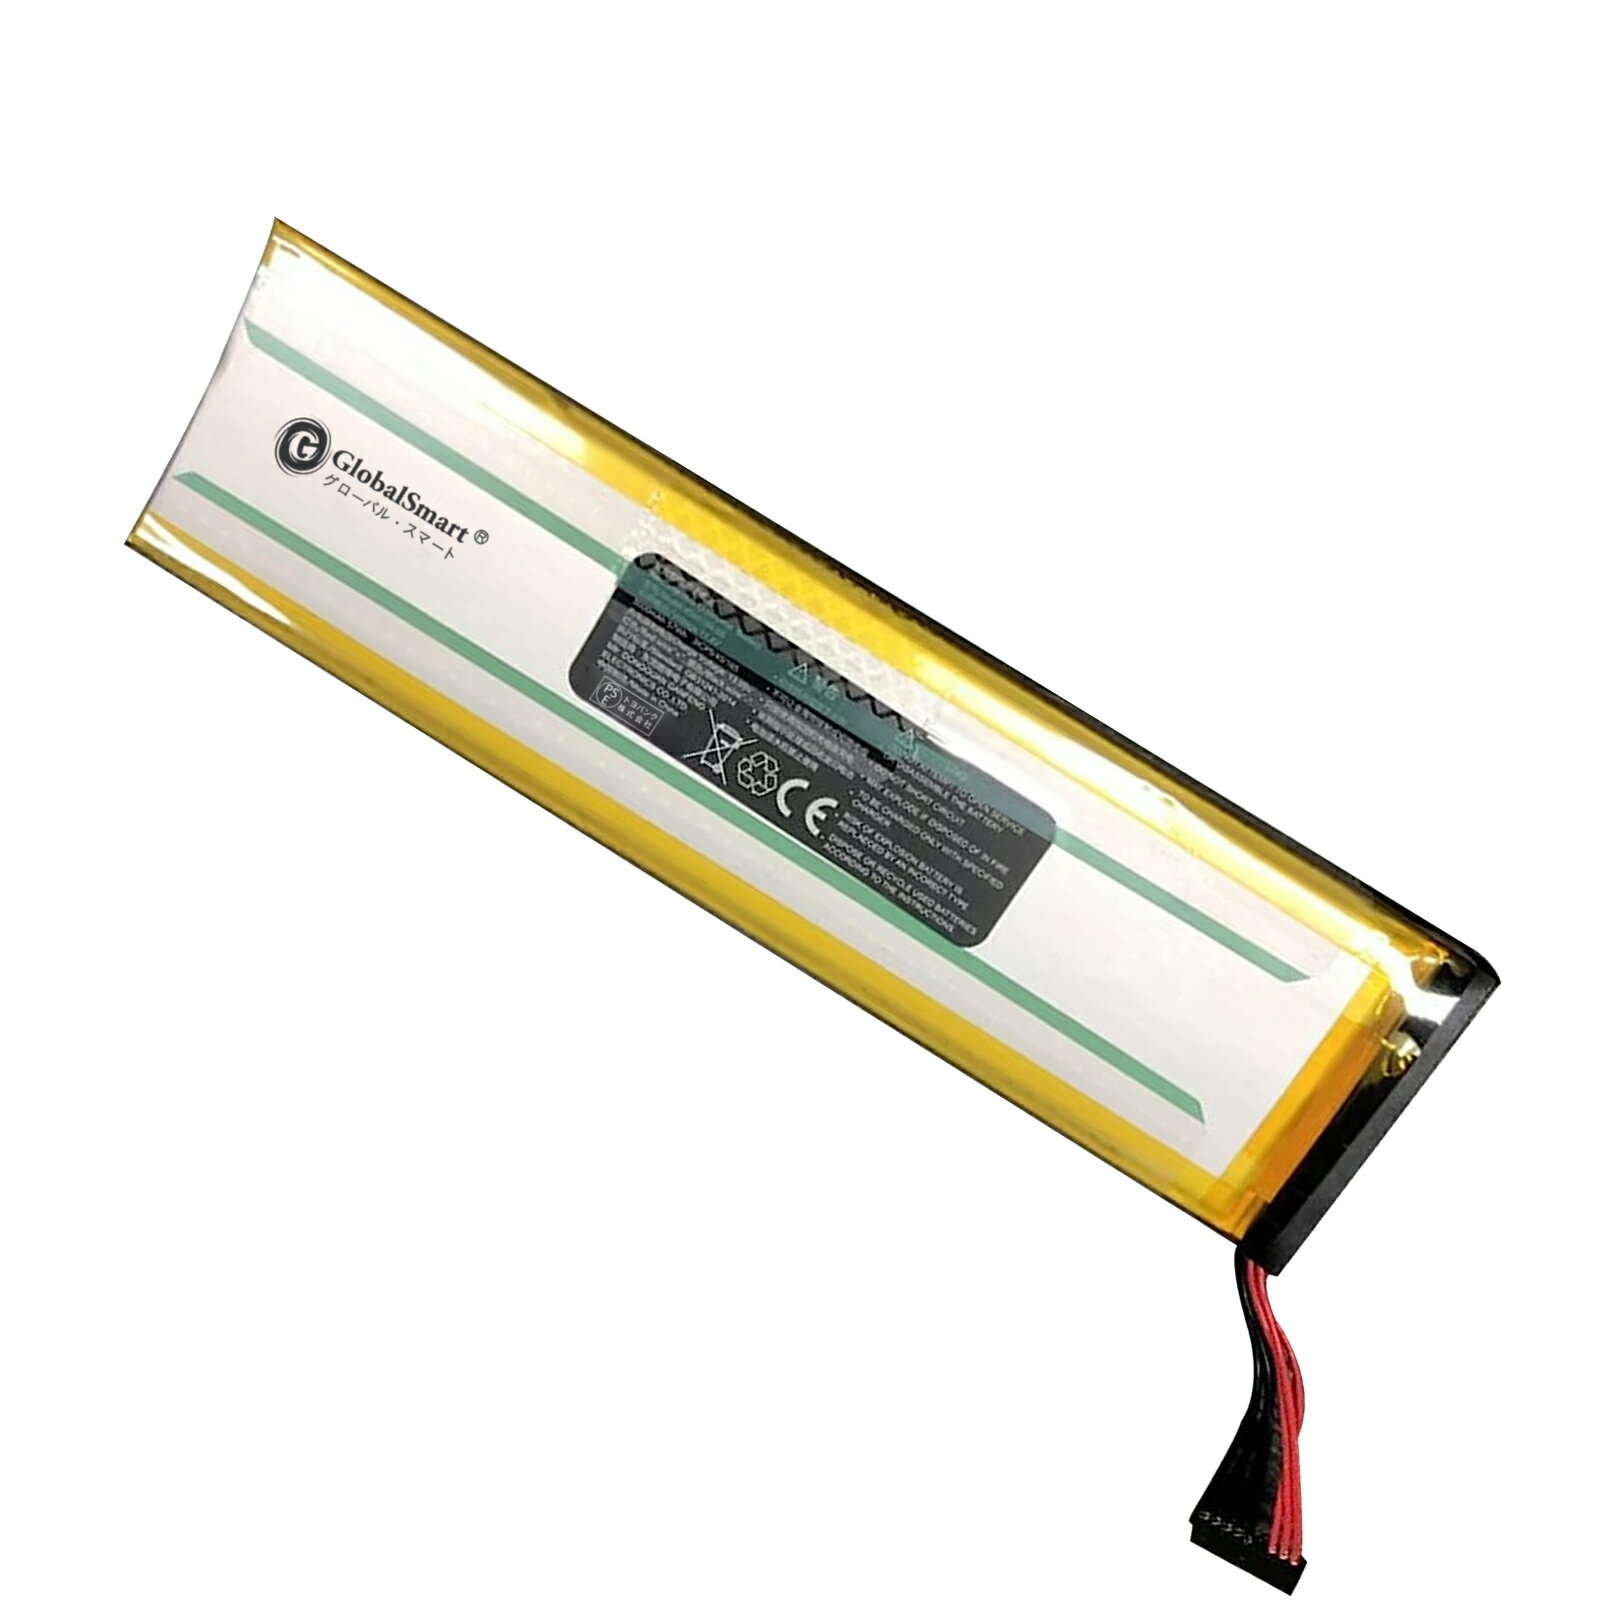 Globalsmart新品GPDWINMAX4545165-3S大容量互換バッテリパック対応用1年保証高性能PSE認証互換バッテリーのポイント対象リンク